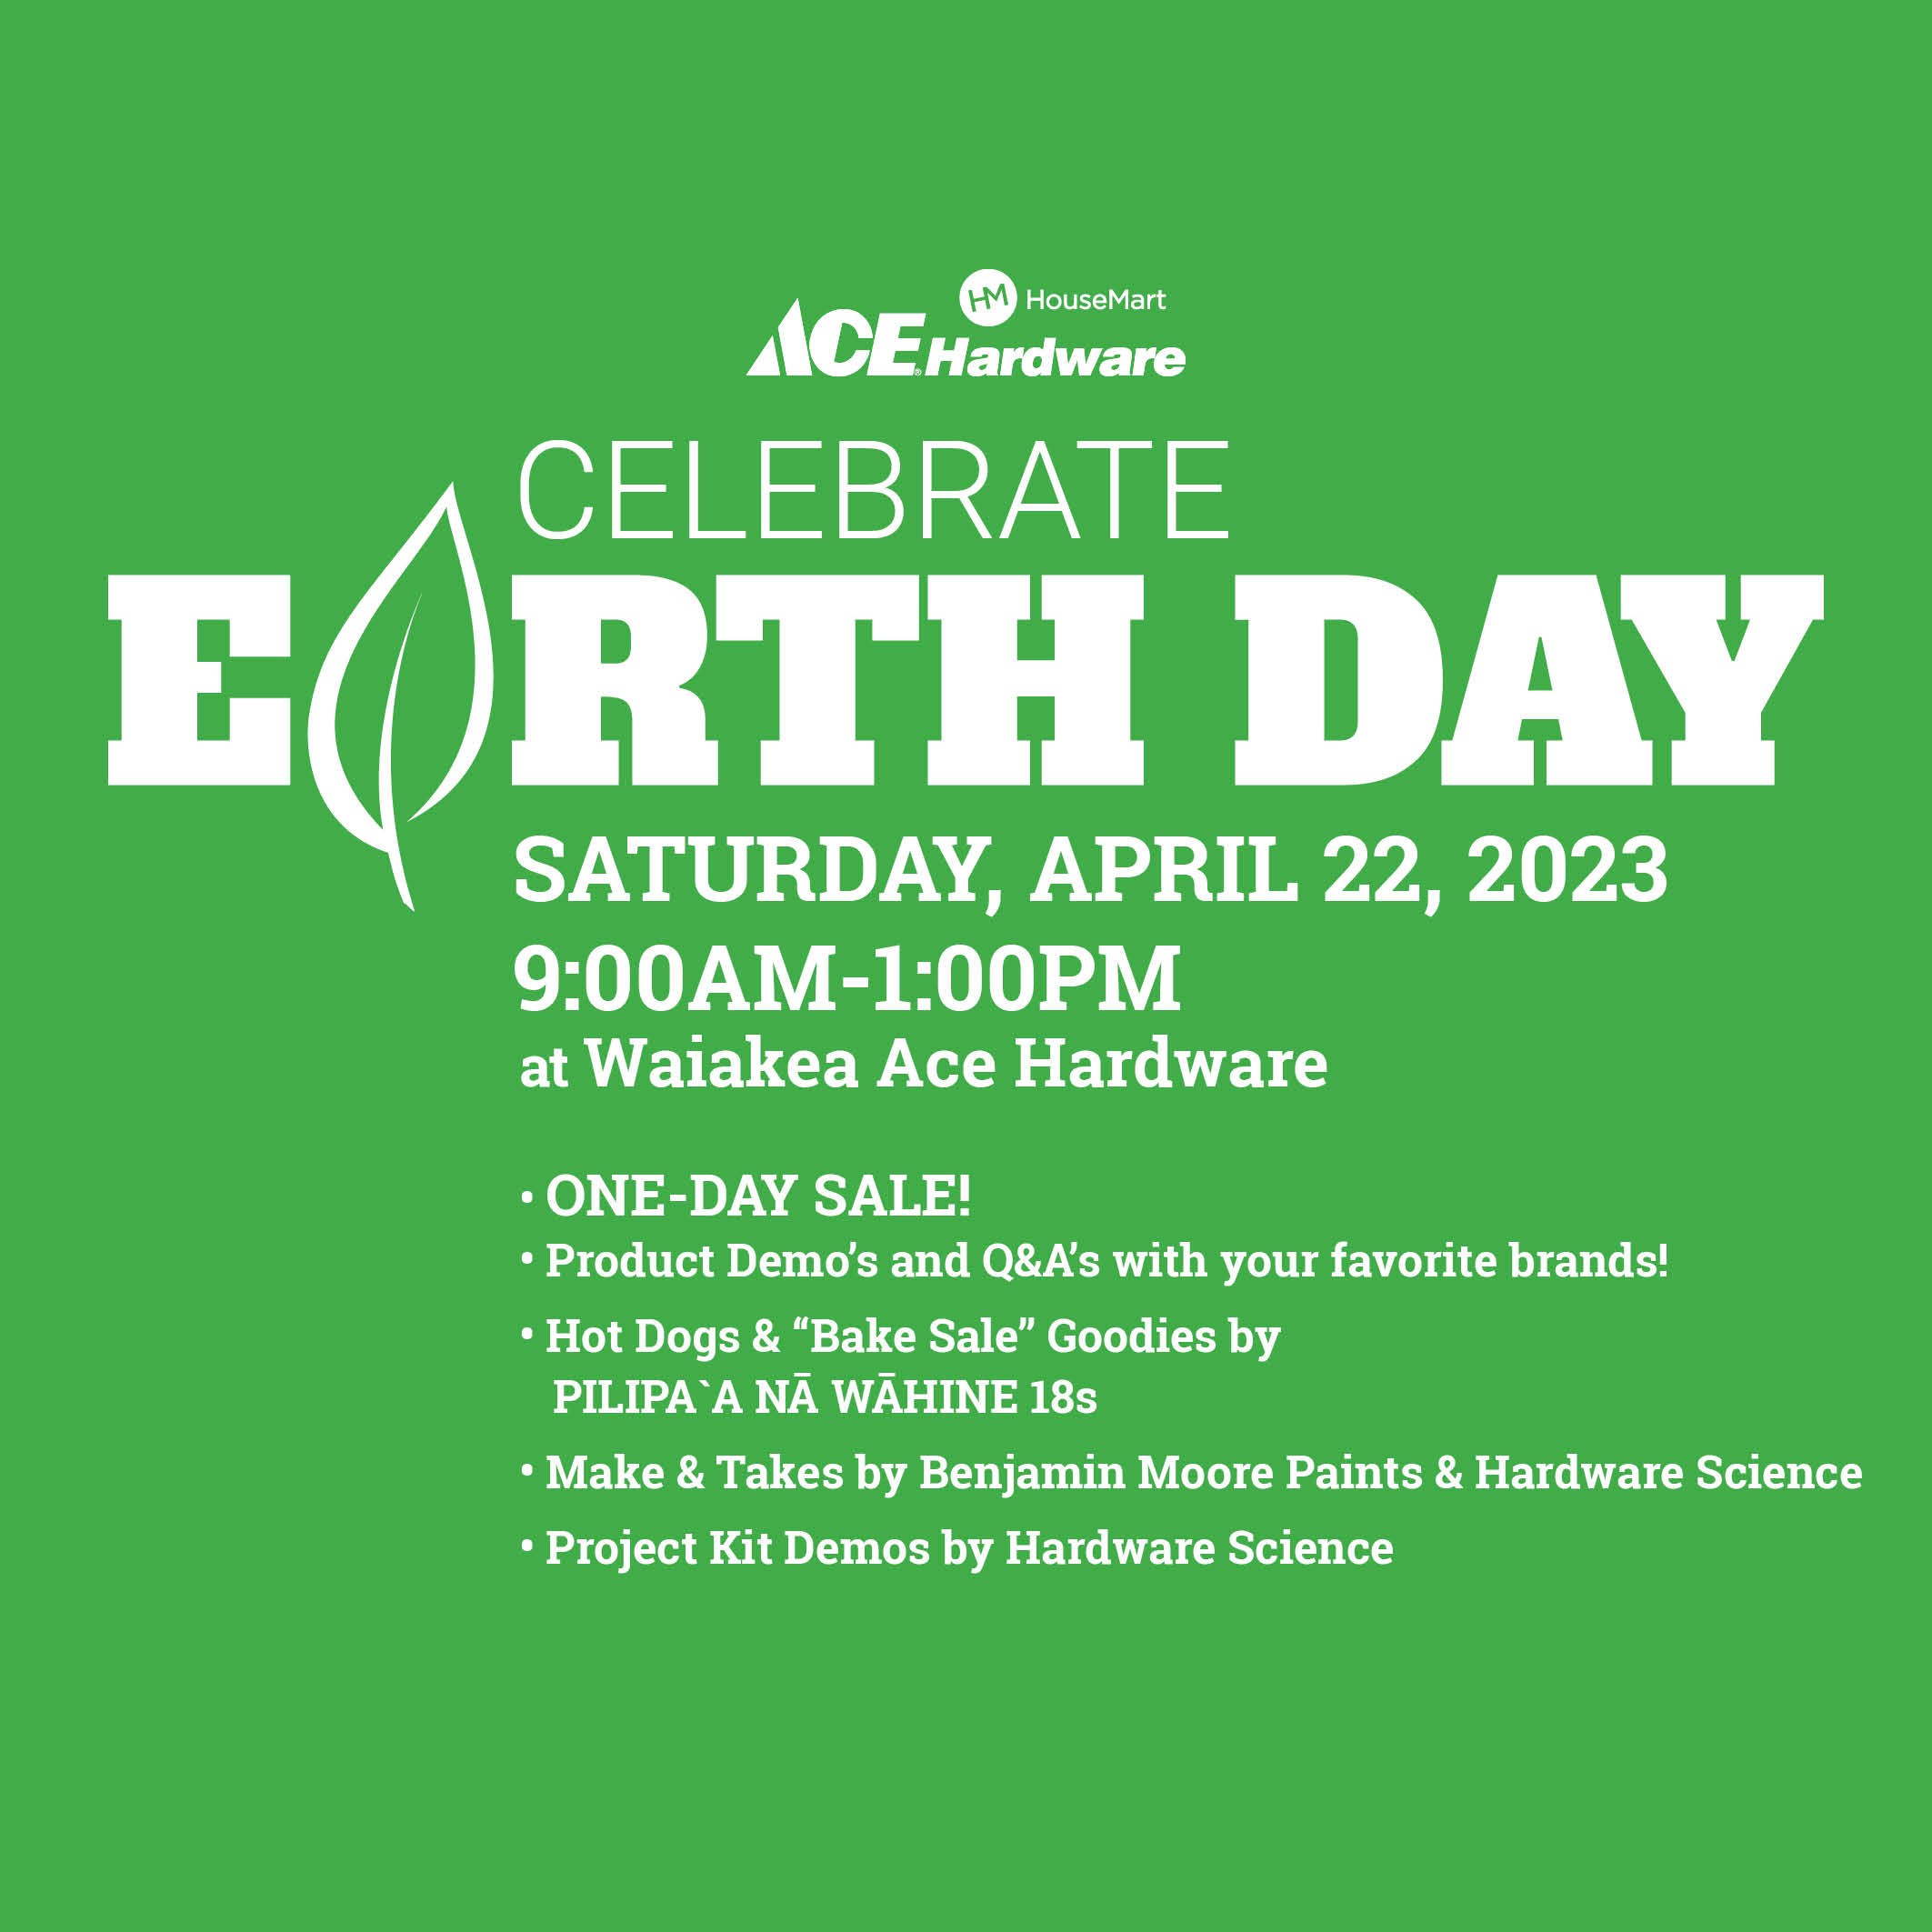 Earth Day
Saturday,
April 22nd
at Waiakea Ace